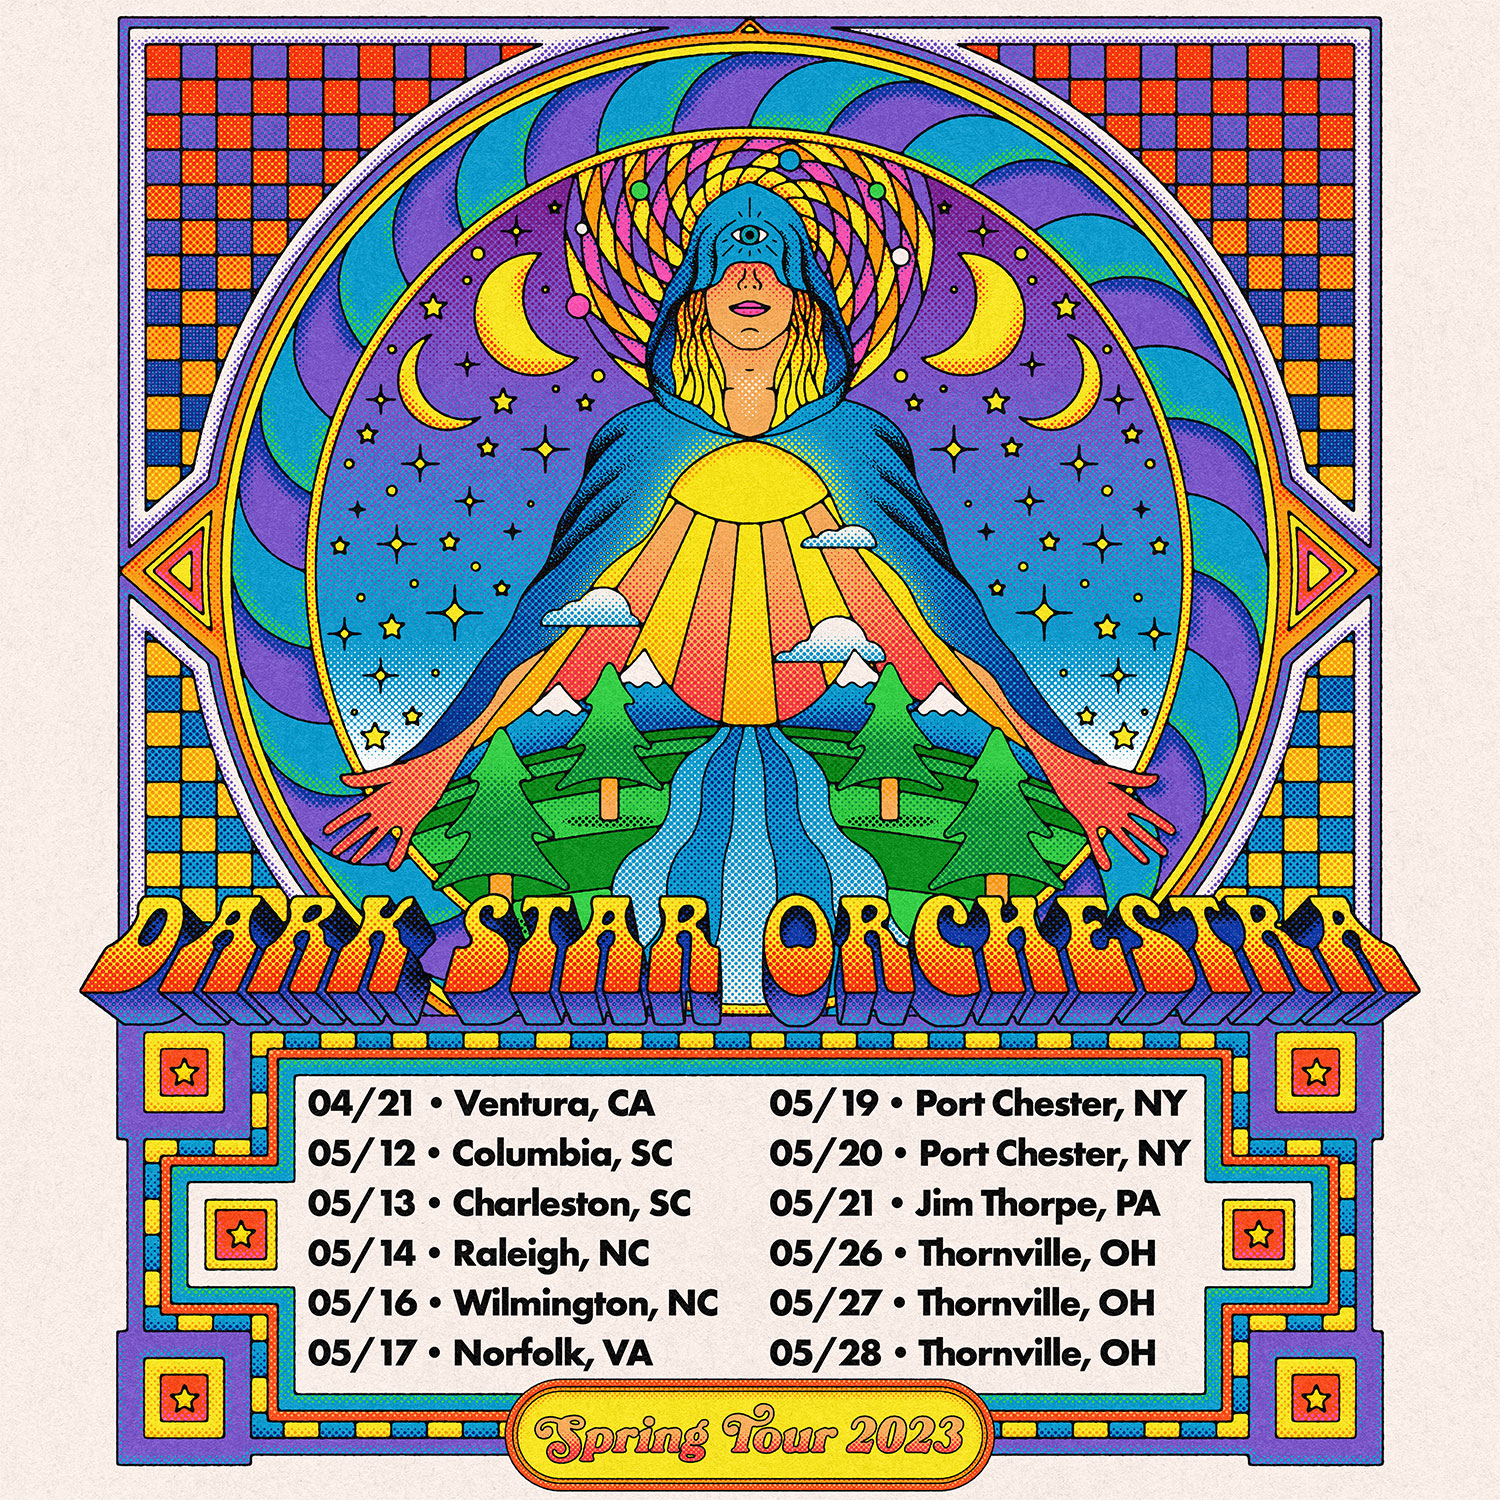 Dark Star Orchestra Announces 2023 Spring Tour